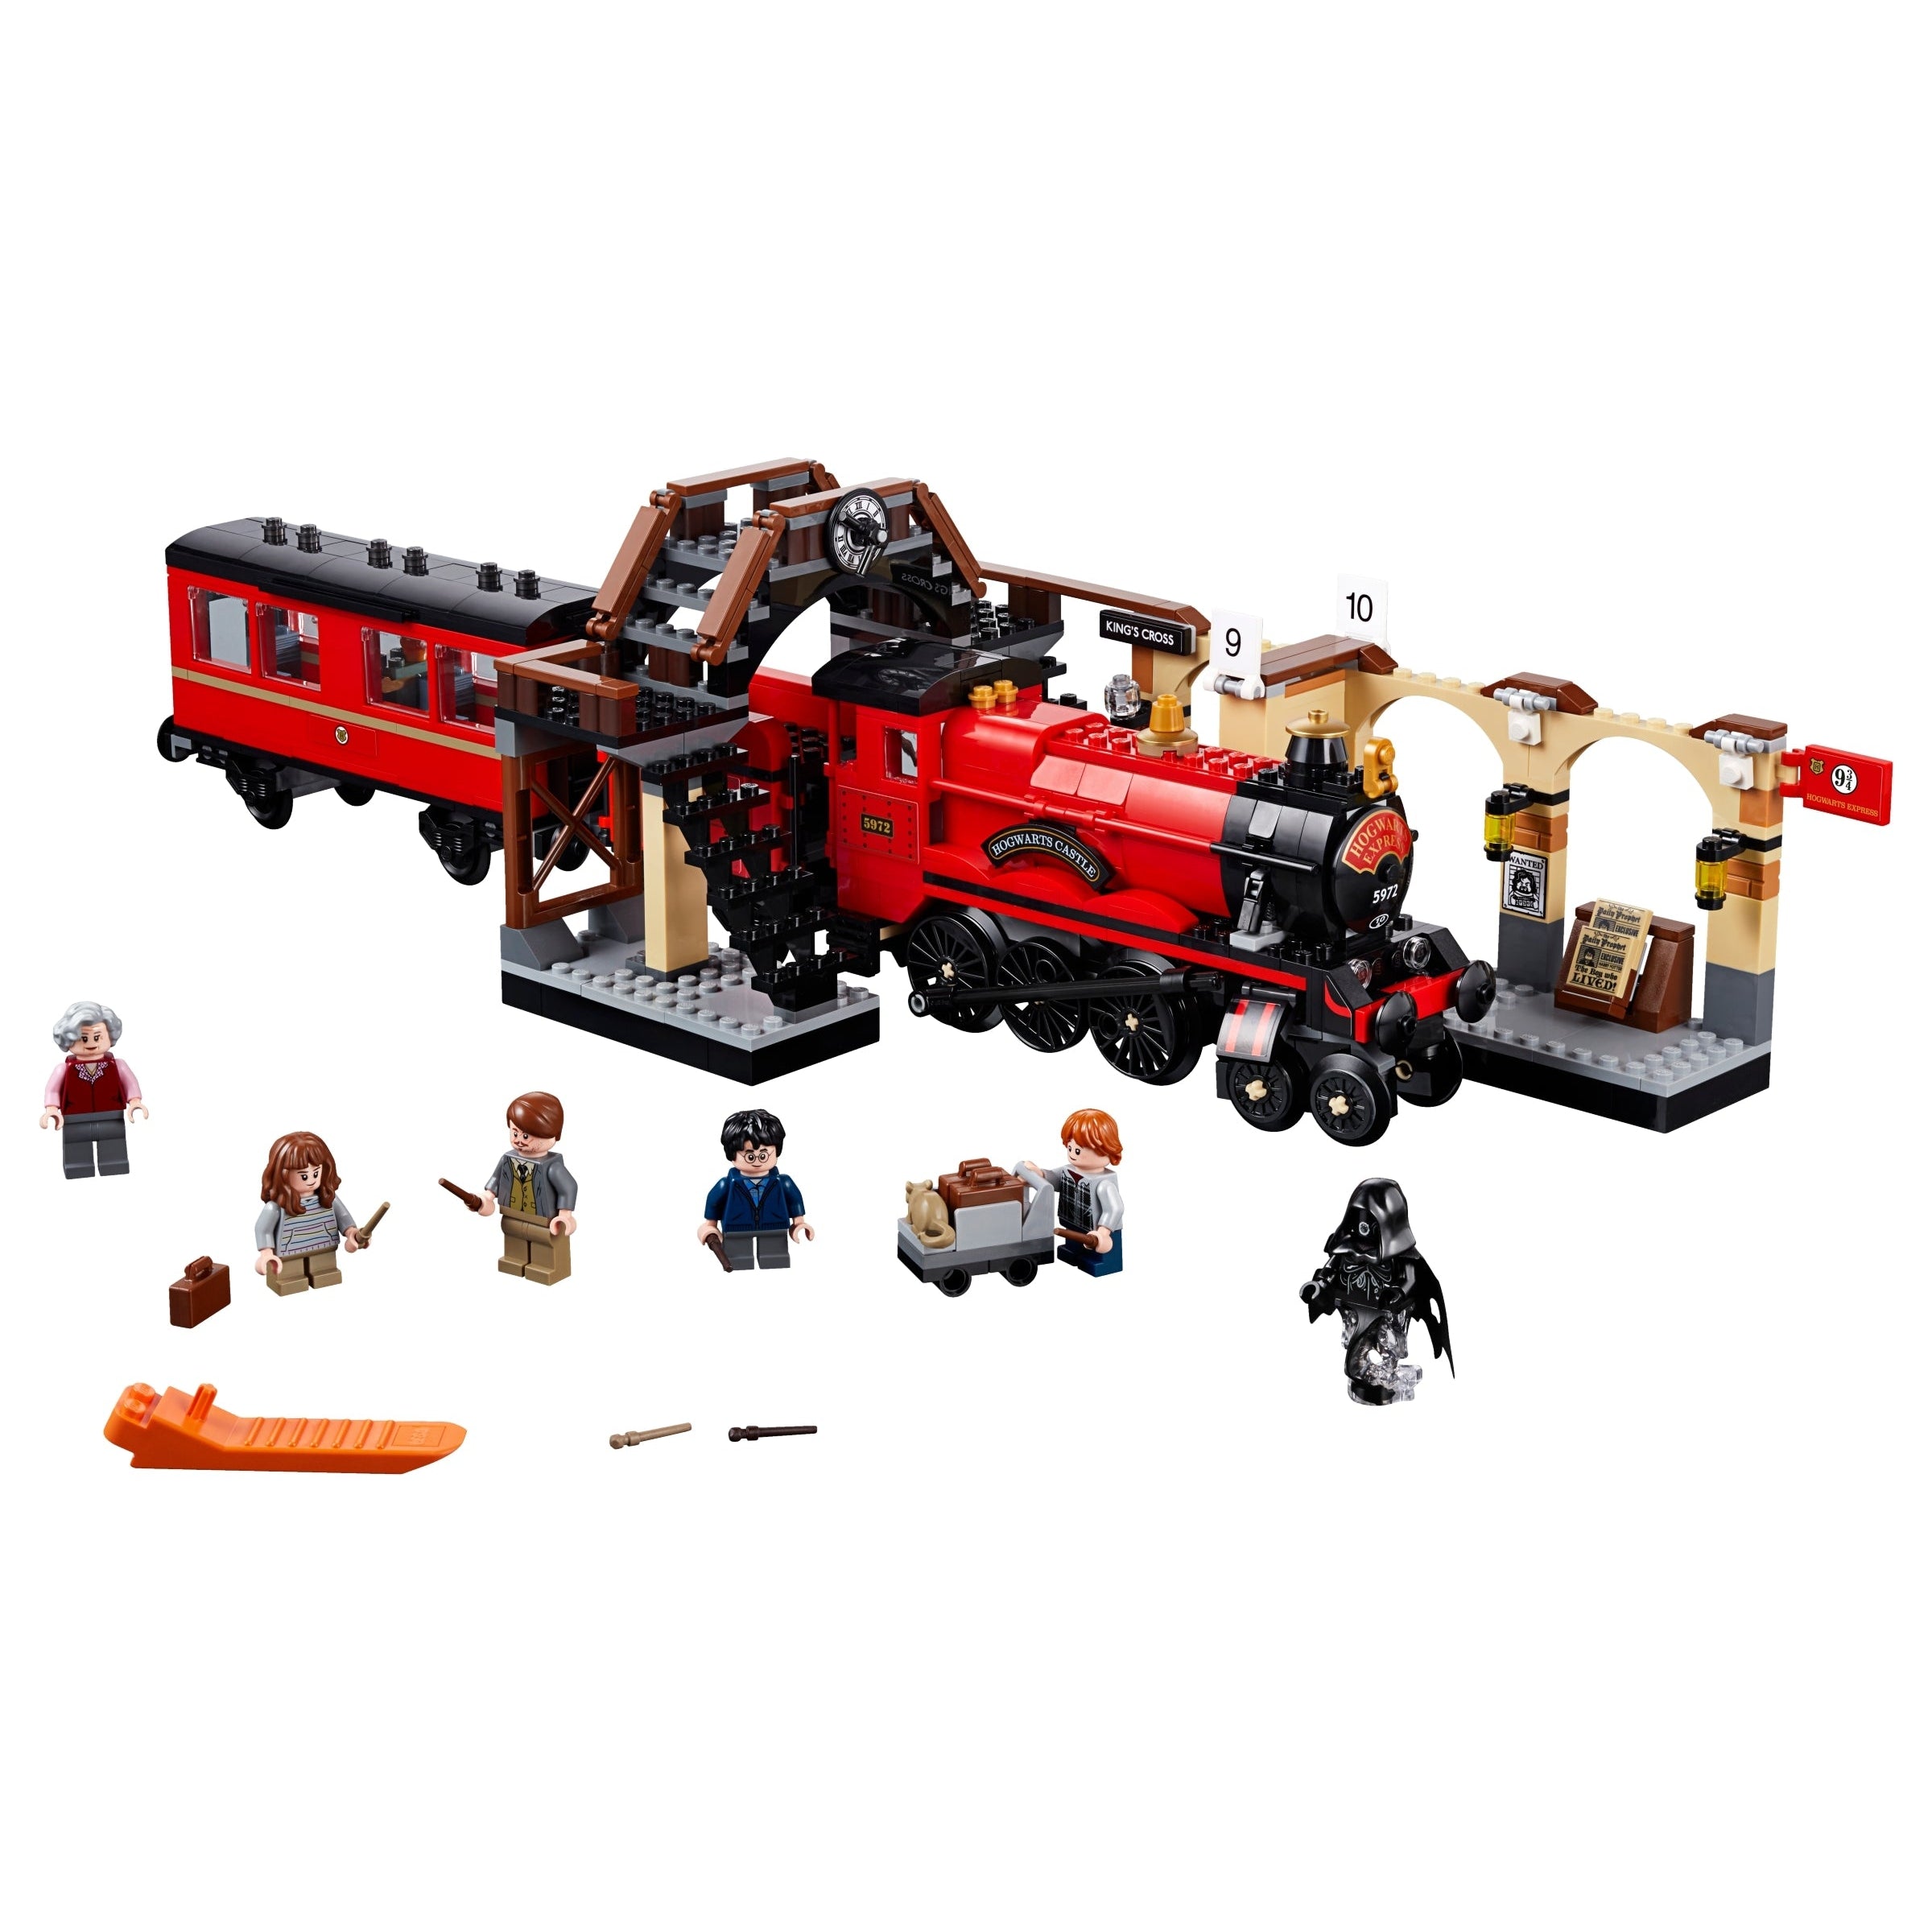 LEGO 75955 Harry Potter Hogwarts Express Train Toy